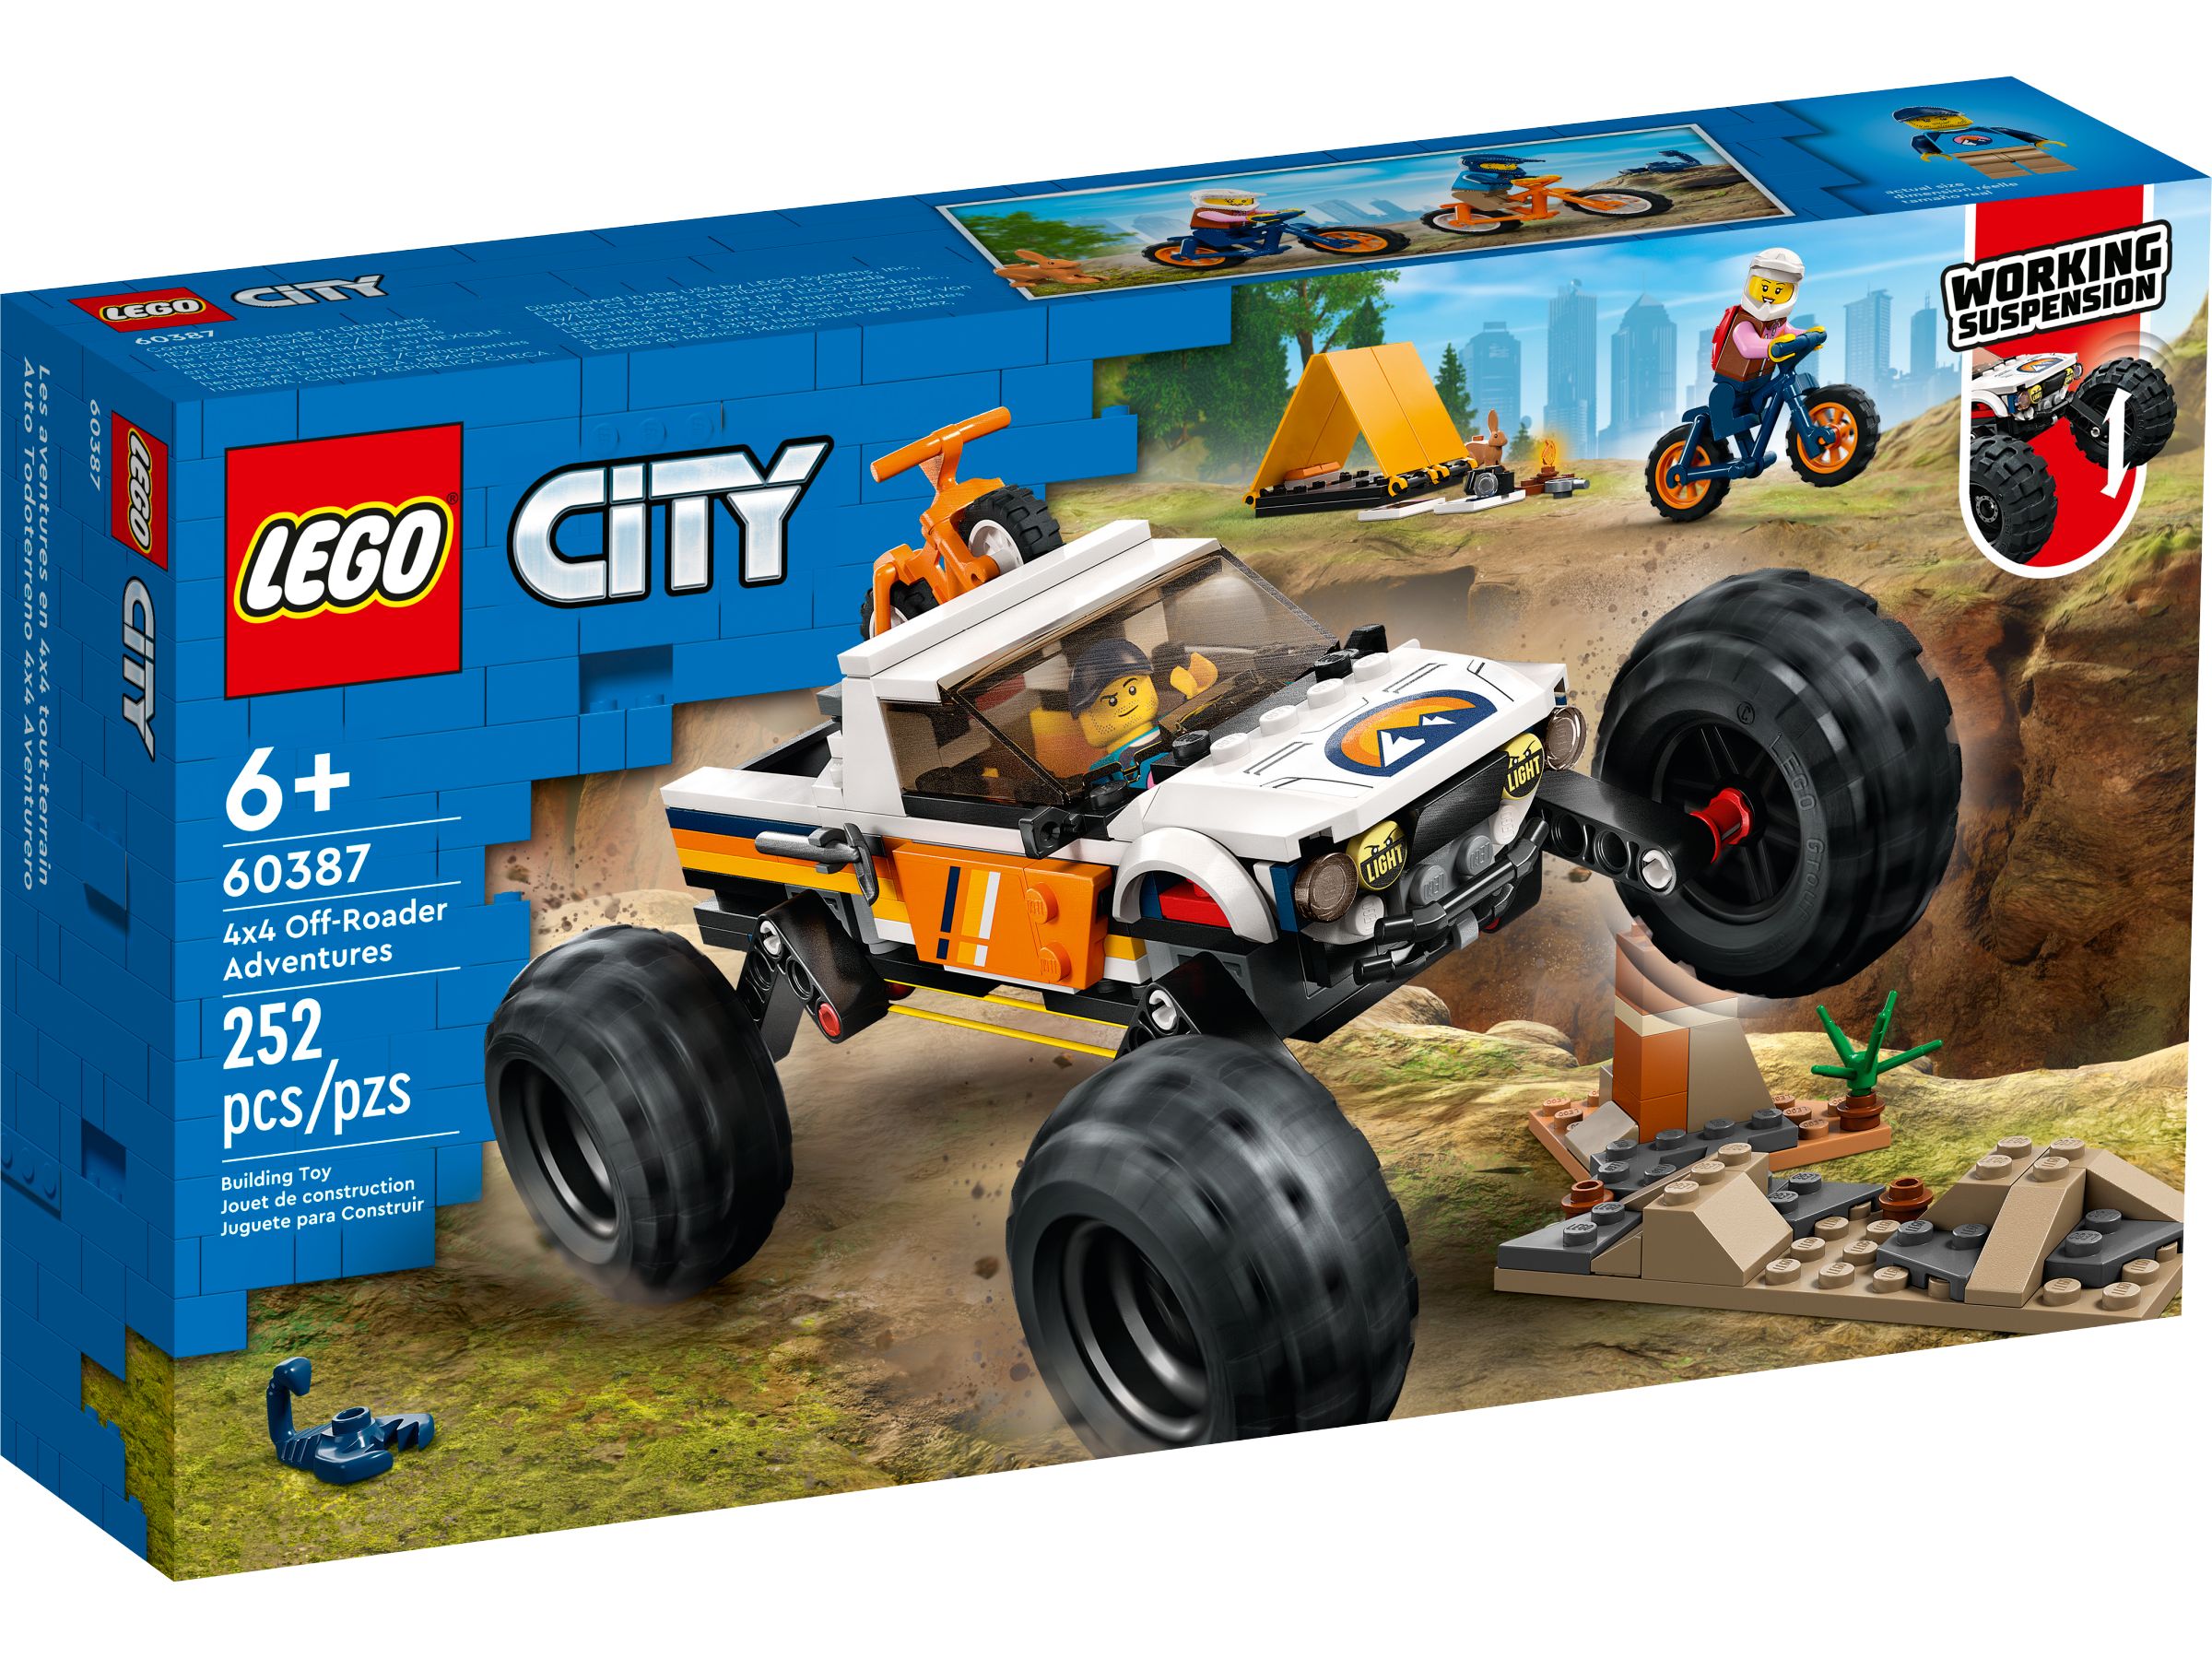 LEGO City 60387 Offroad Abenteuer LEGO_60387_alt1.jpg